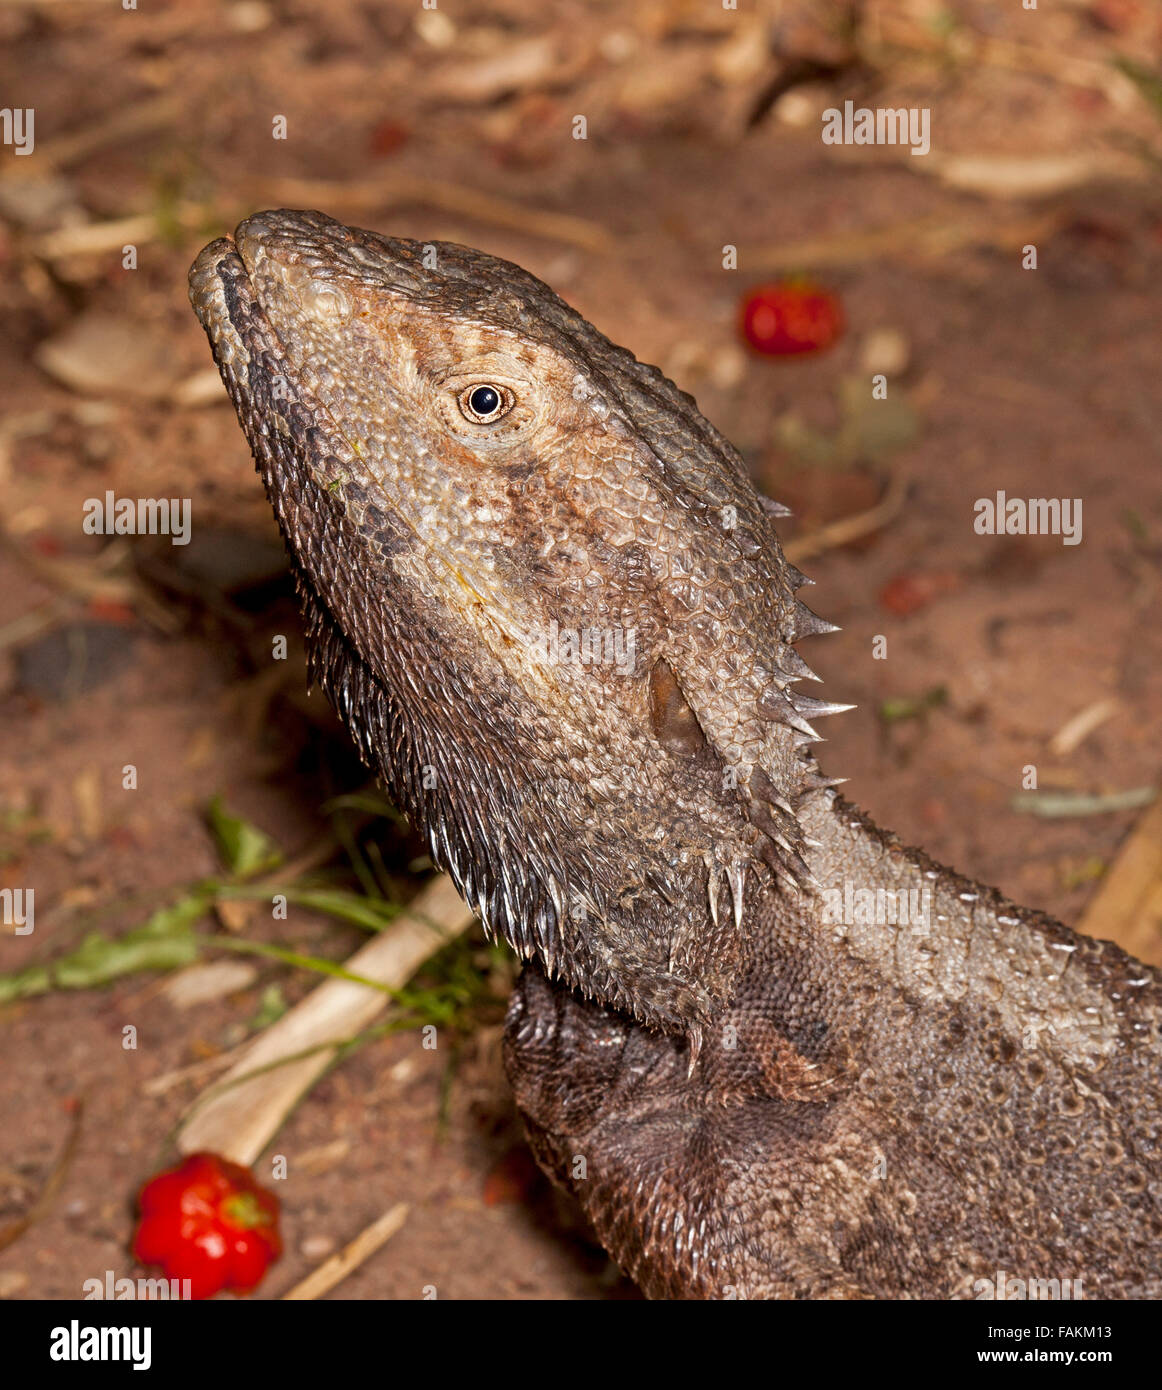 Close-up of face and head of Australian bearded dragon lizard, Pogona barbata, in the wild in a garden Stock Photo